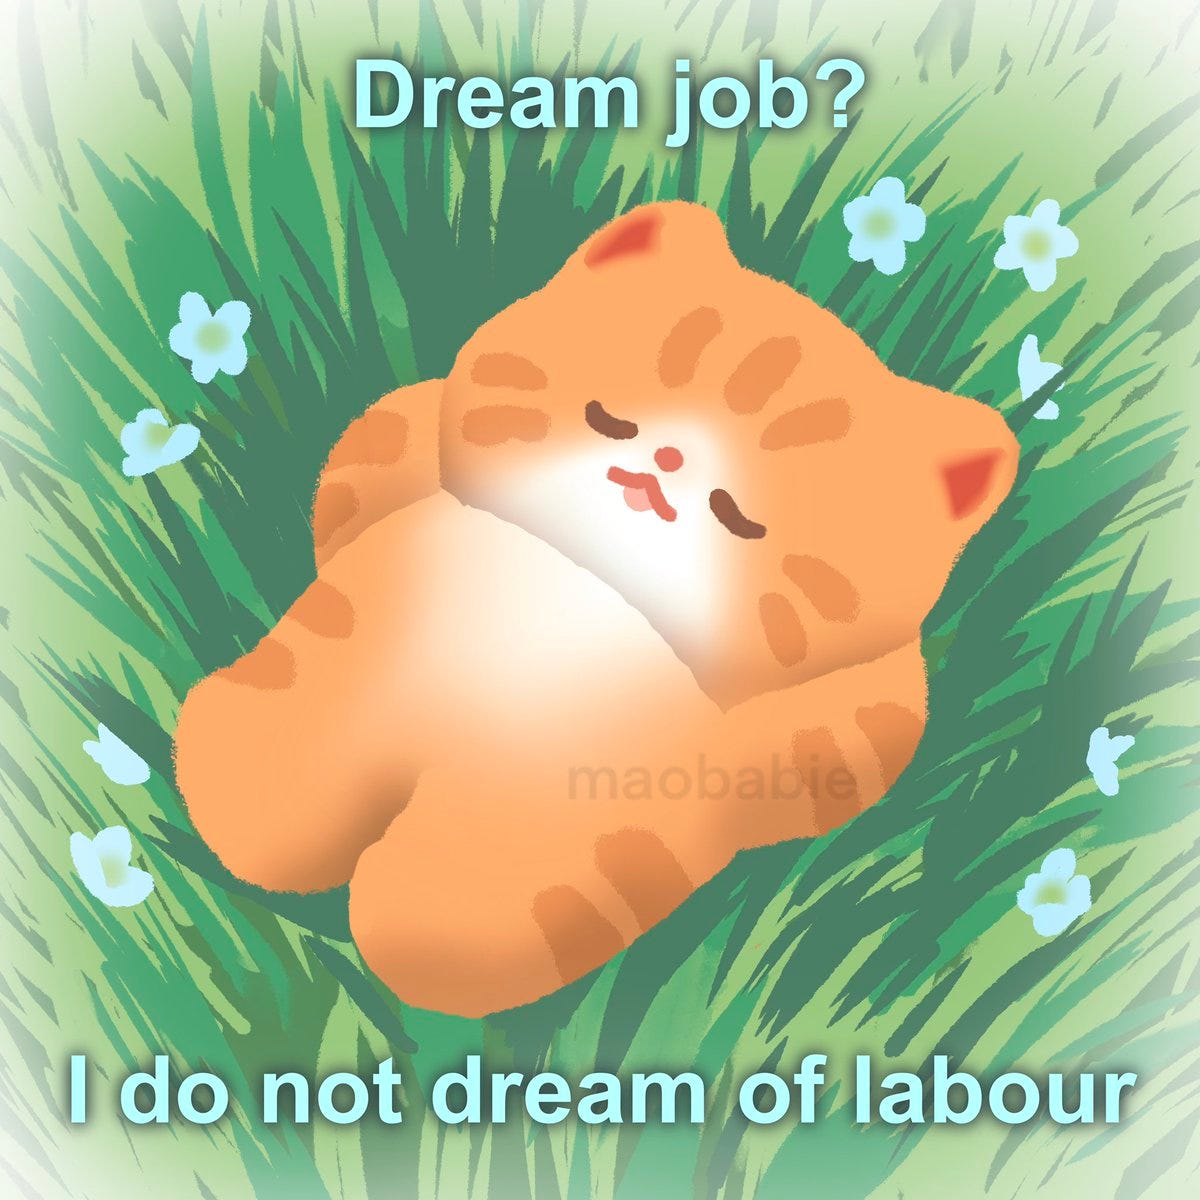 A cartoon orange cat lays in a field. The caption reads "Dream job? I do not dream of labor."